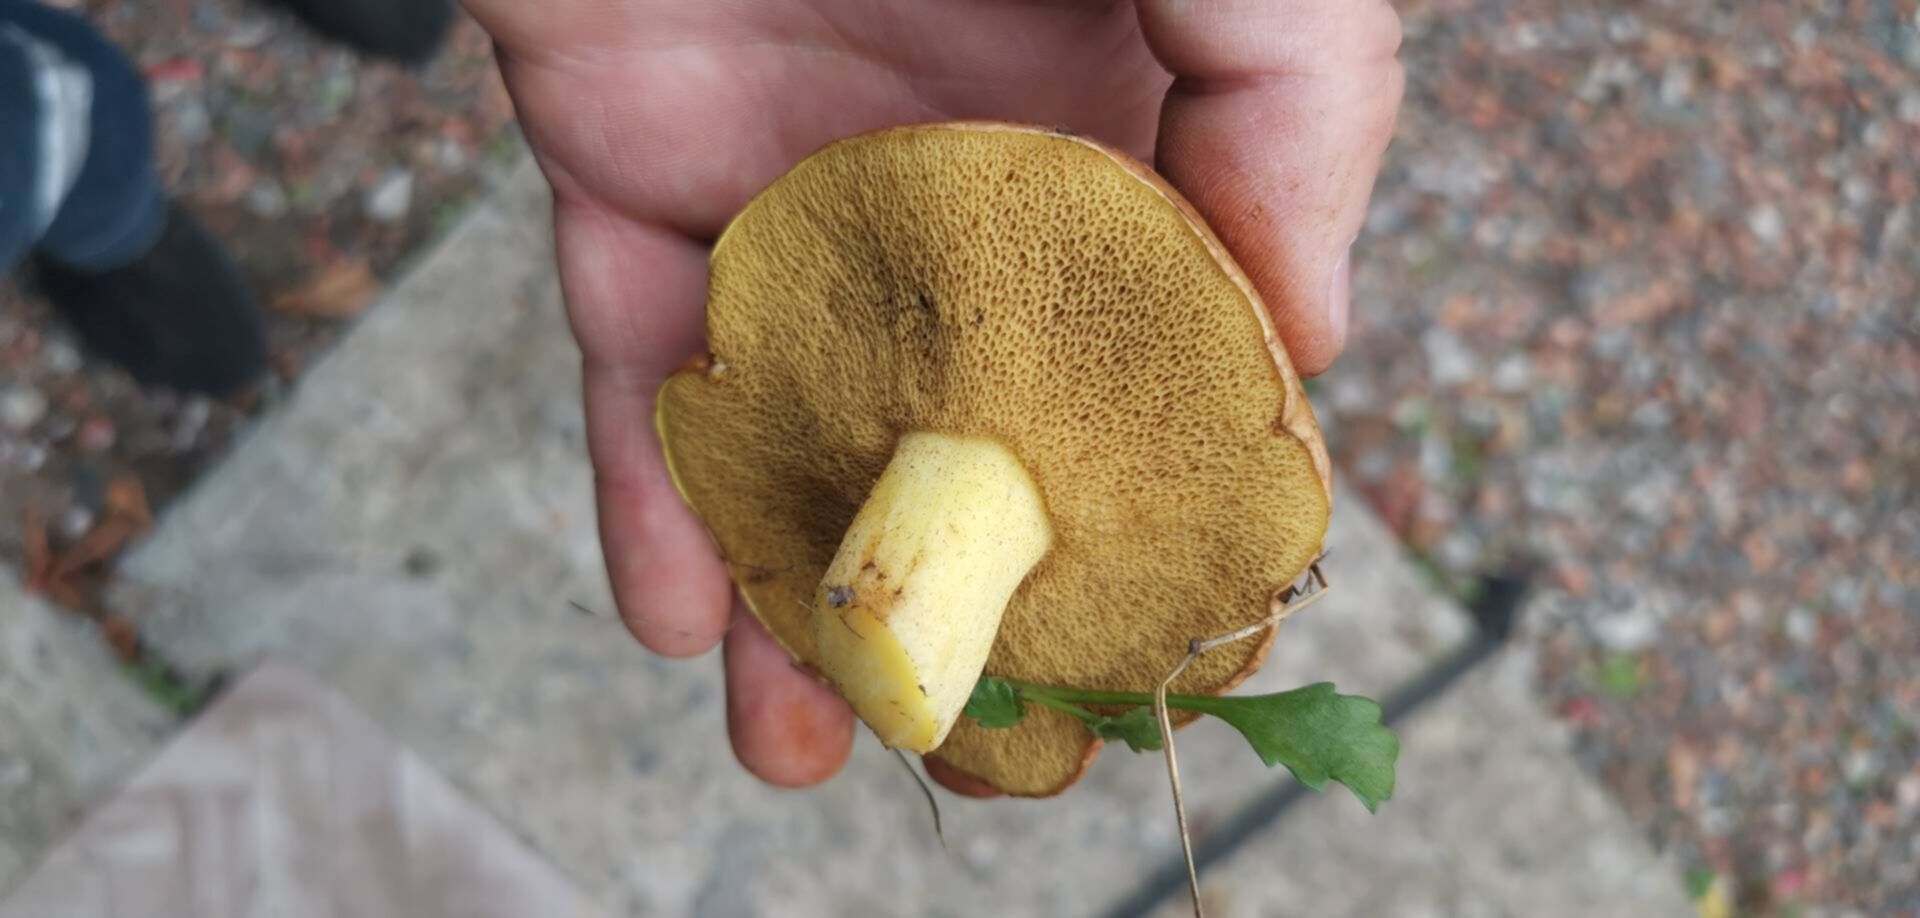 Fungus image